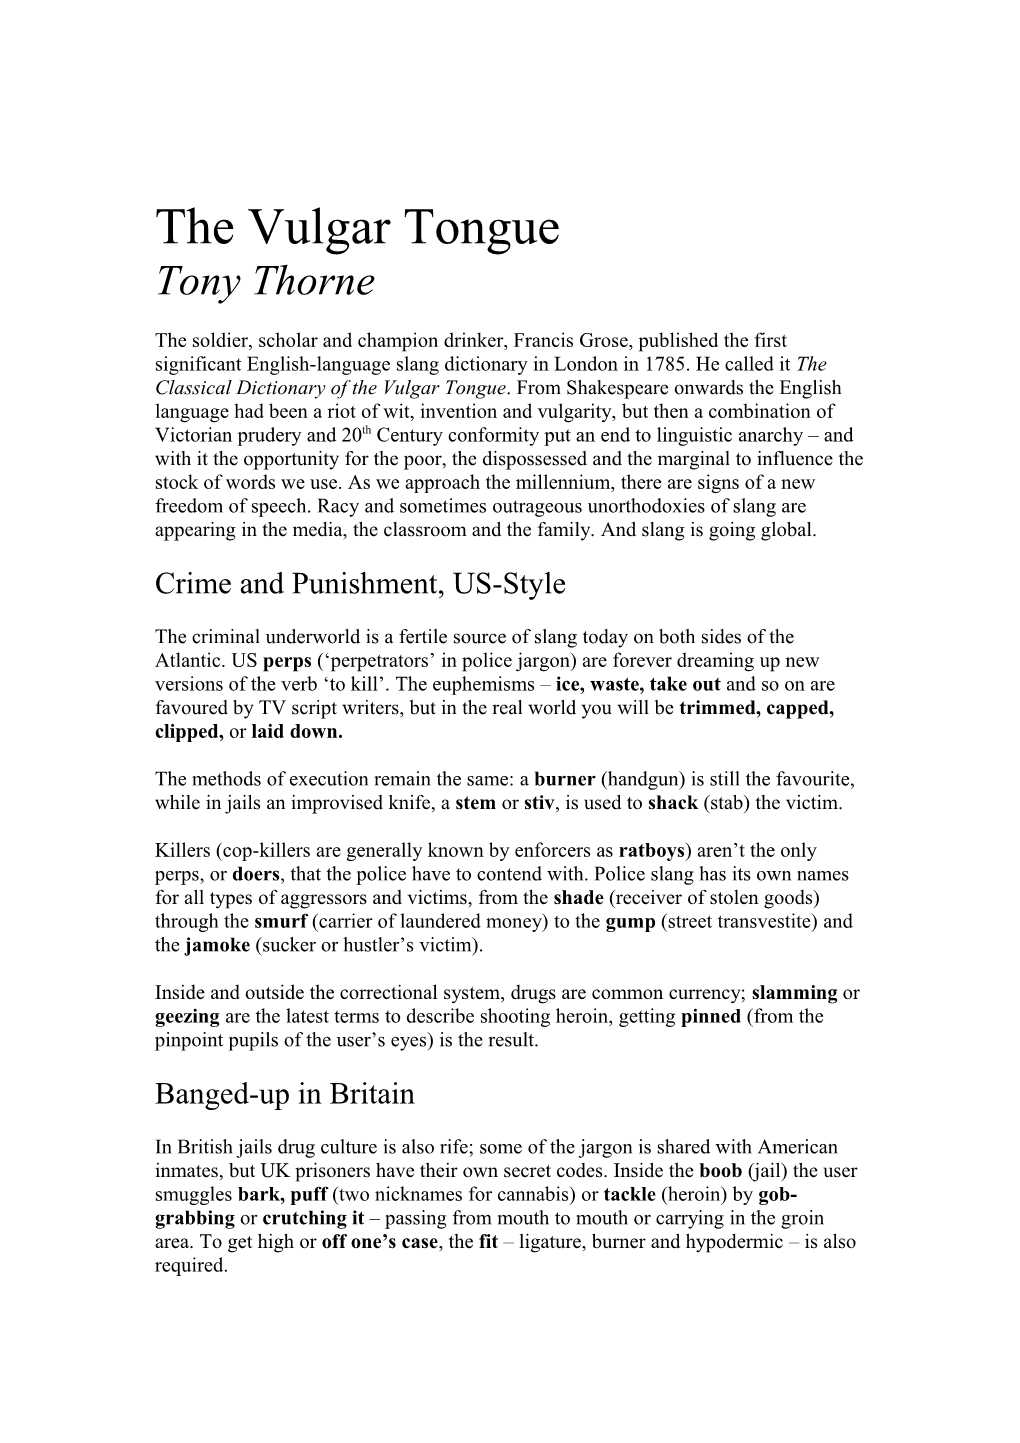 The Vulgar Tongue Tony Thorne